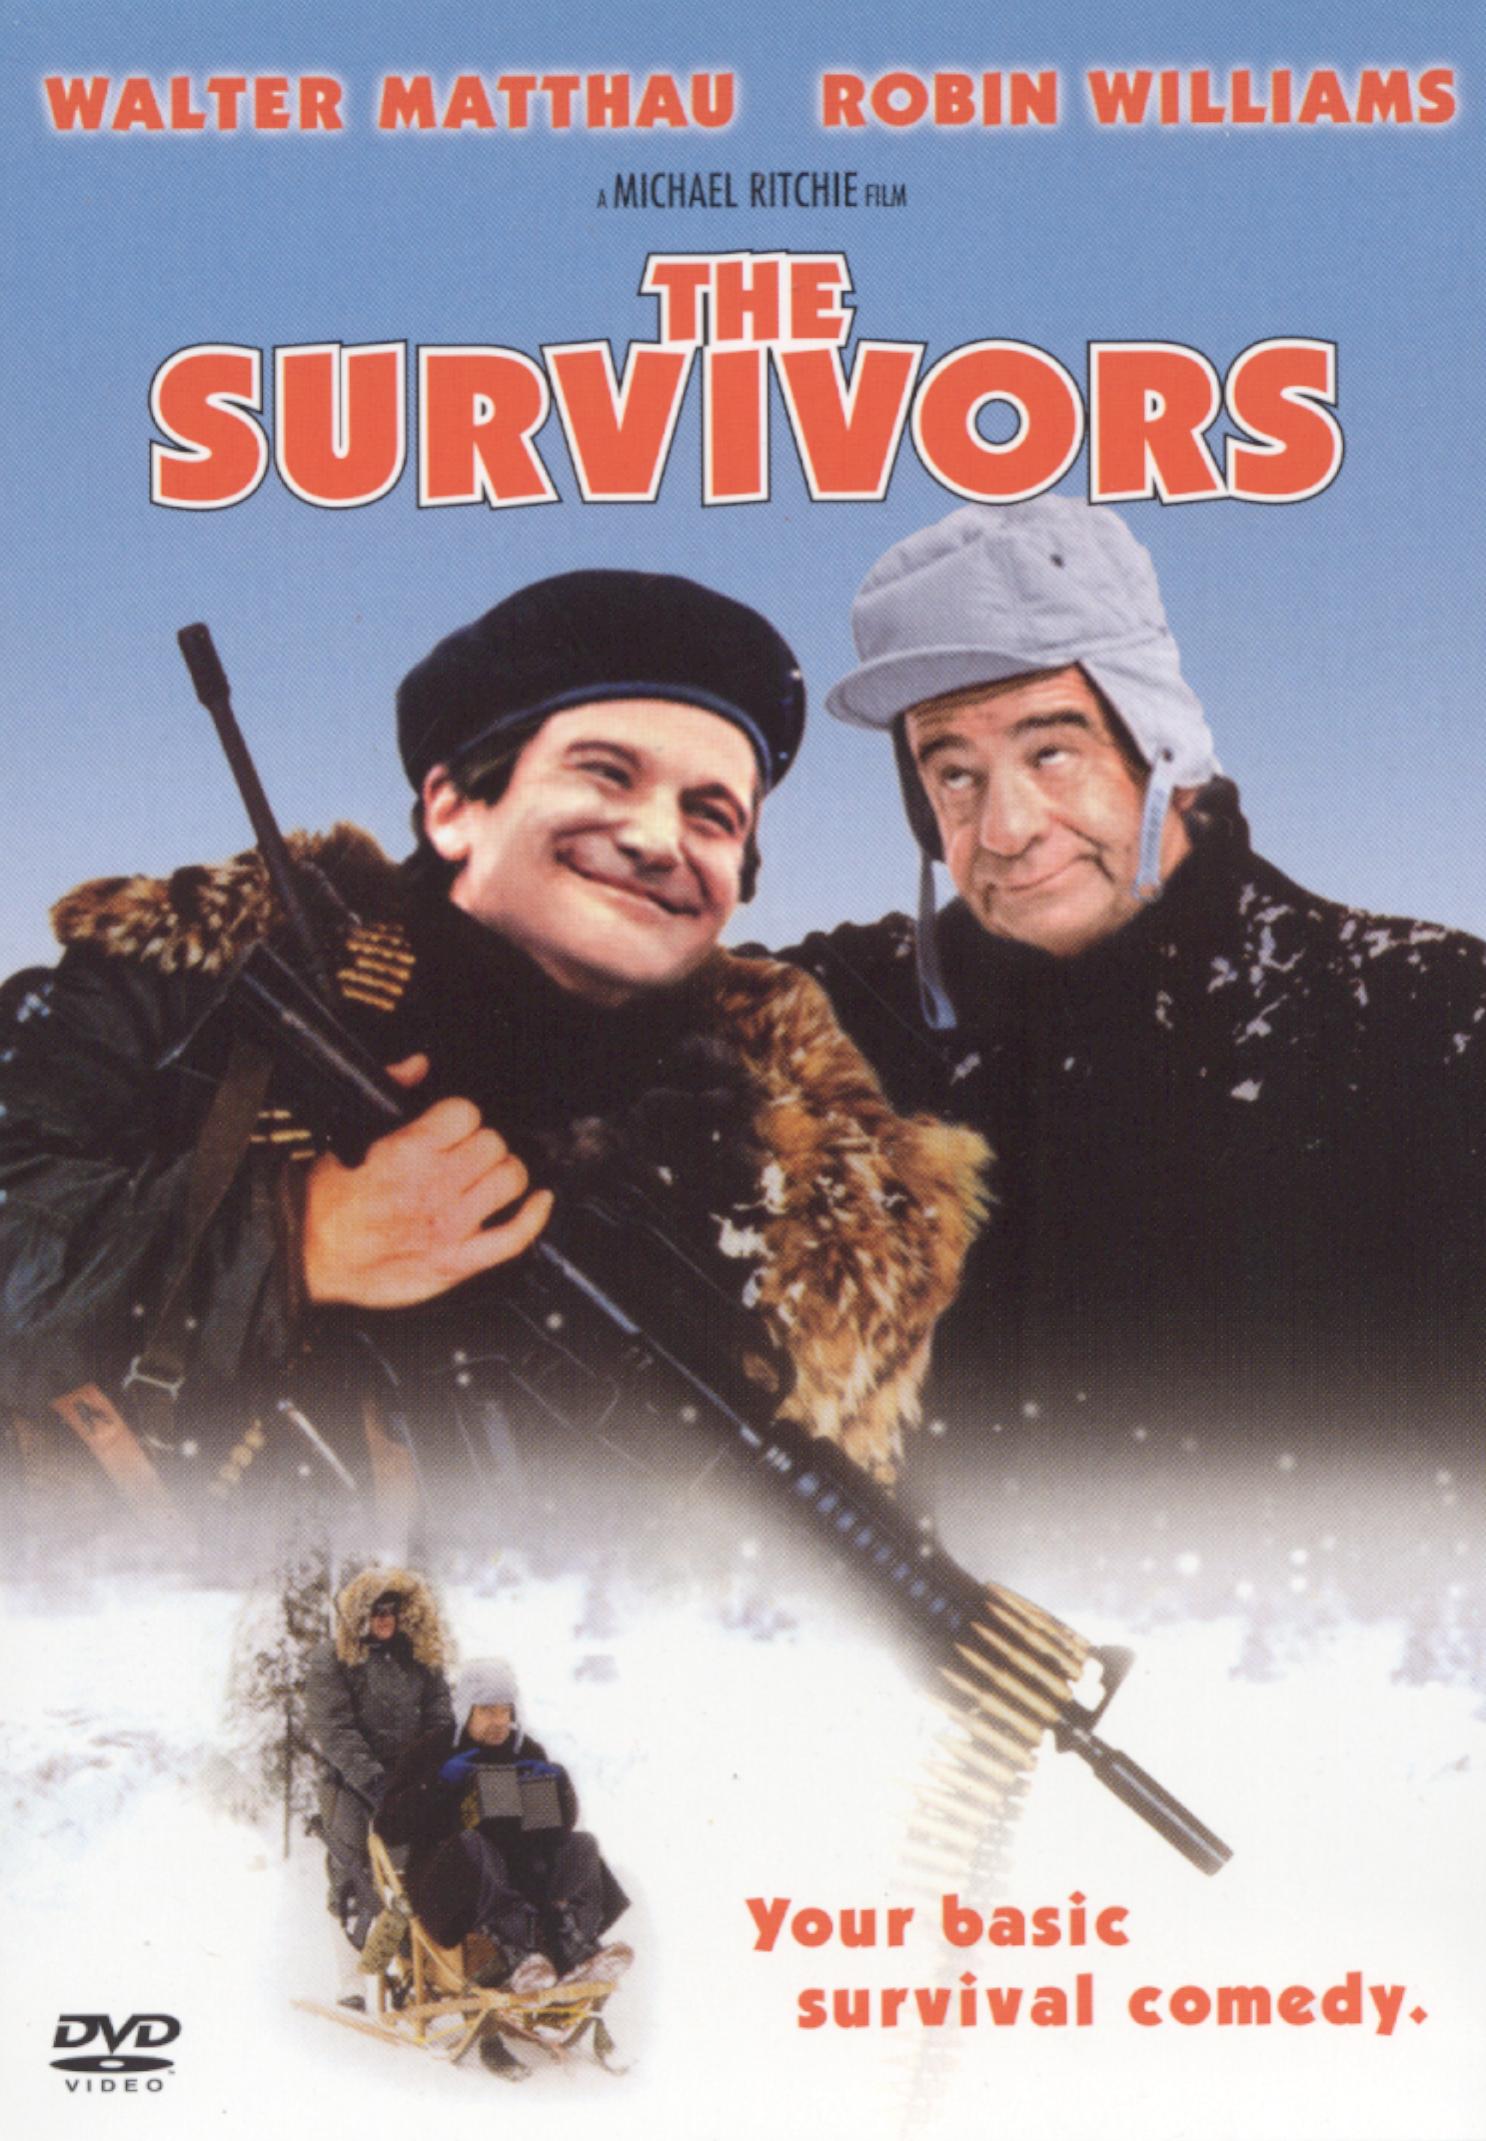 The Survivors [DVD] [1983] Best Buy